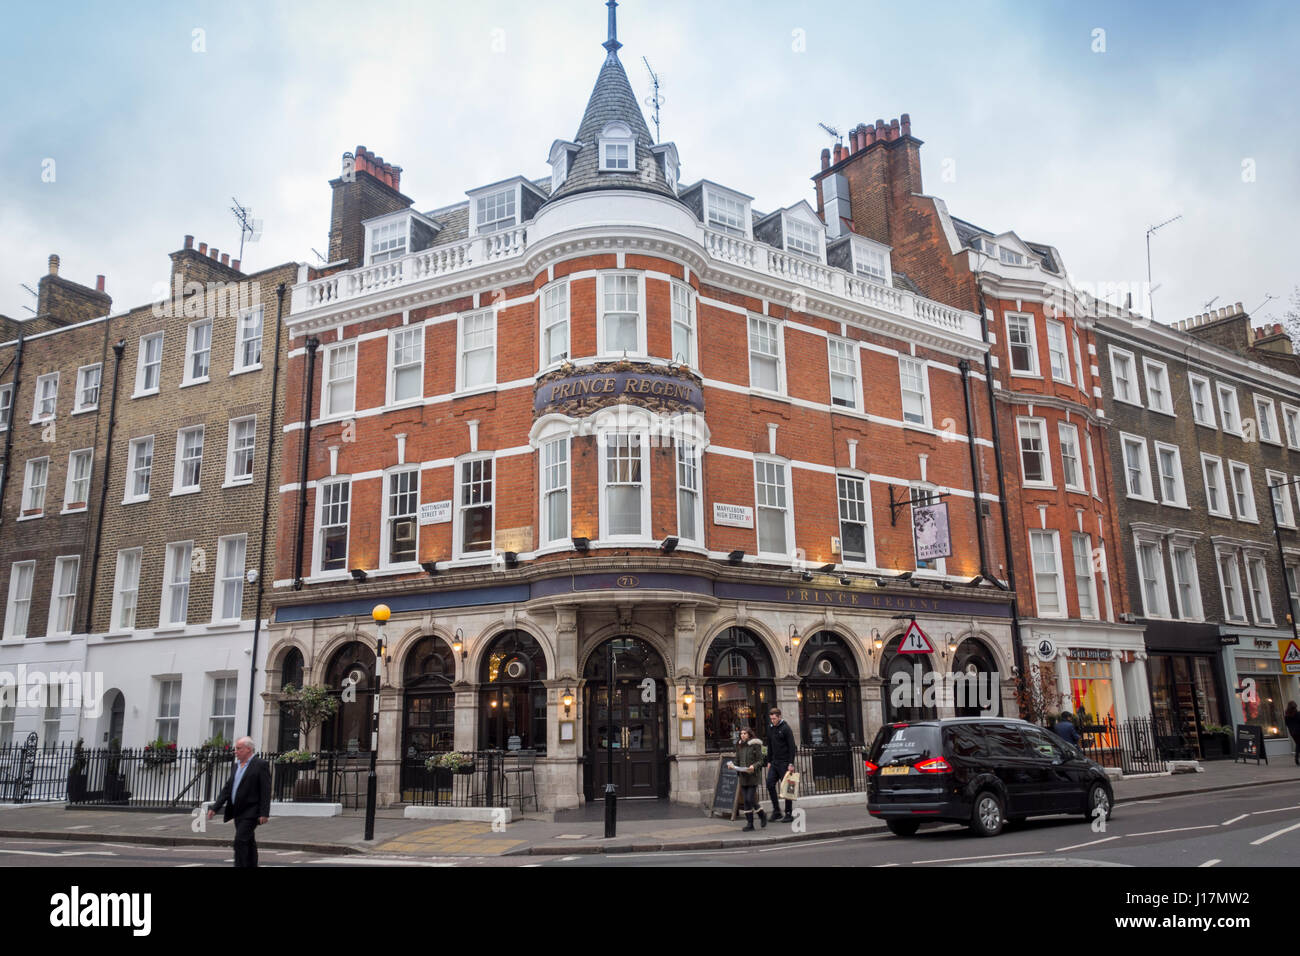 Prince Regent pub public house, Marylebone High Street / Nottingham Street, London, UK Stock Photo